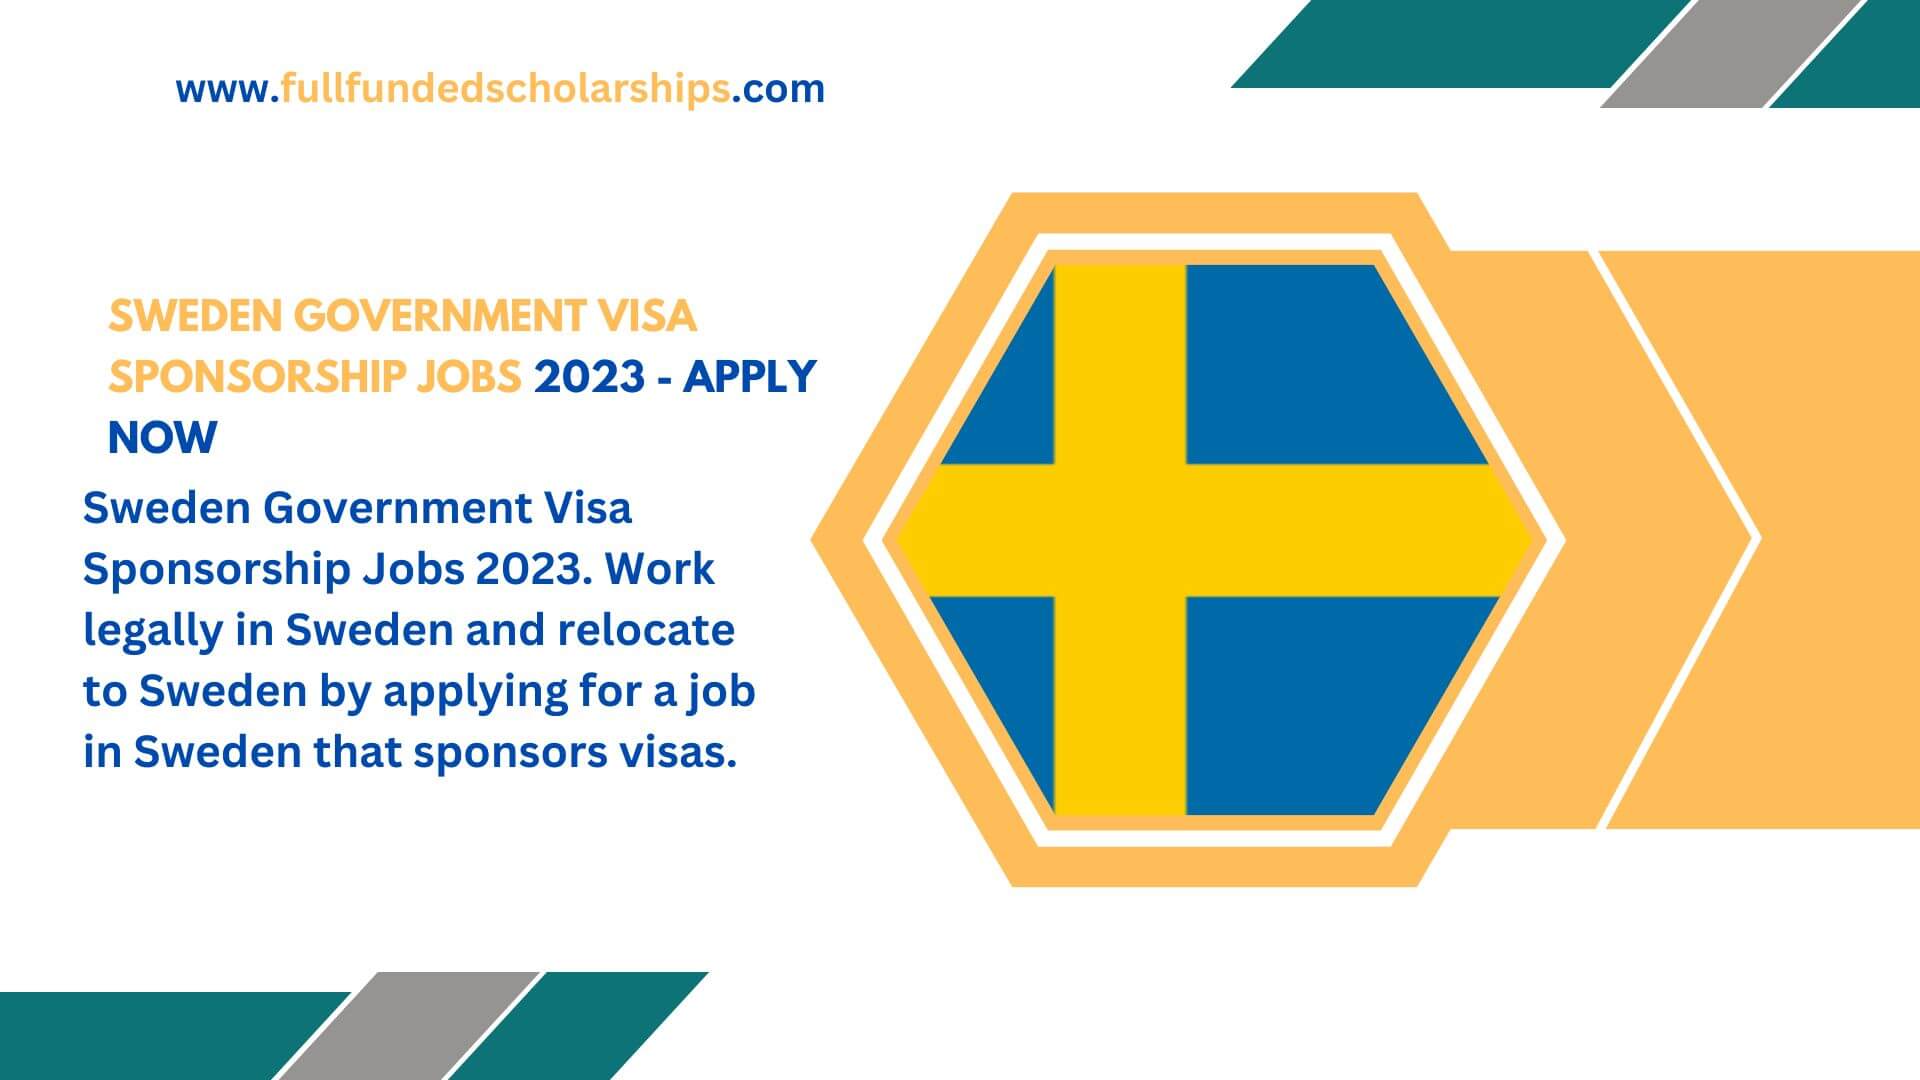 Sweden Government Visa Sponsorship Jobs 2023 - Apply Now